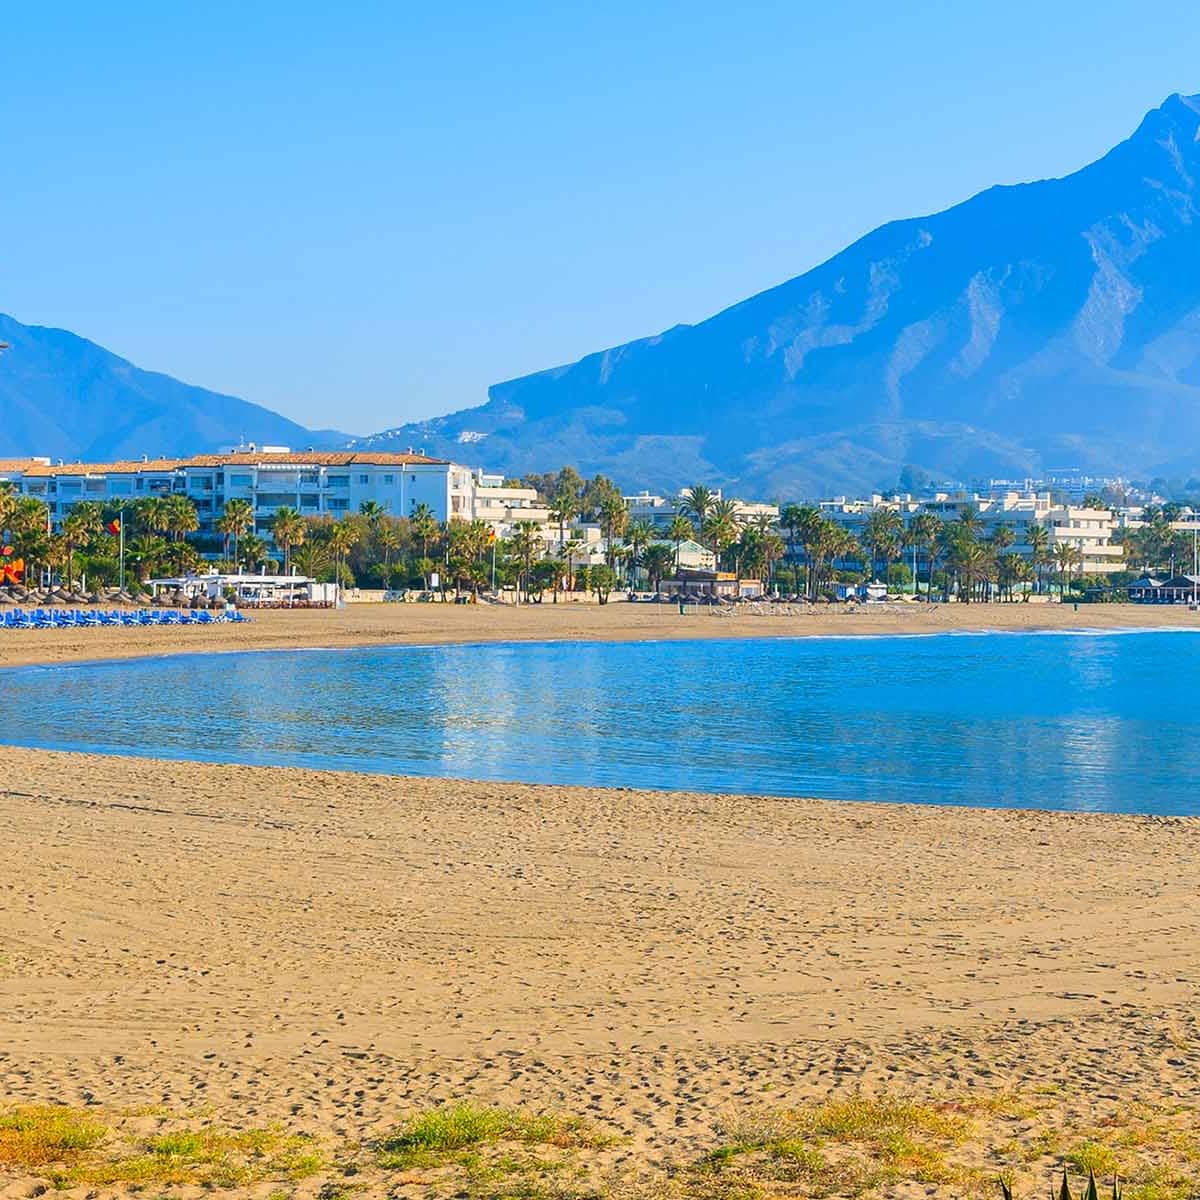 Walking Around in Puerto Banus Beach, Marbella, in March 2023 (4K Ultra HD,  60fps) 